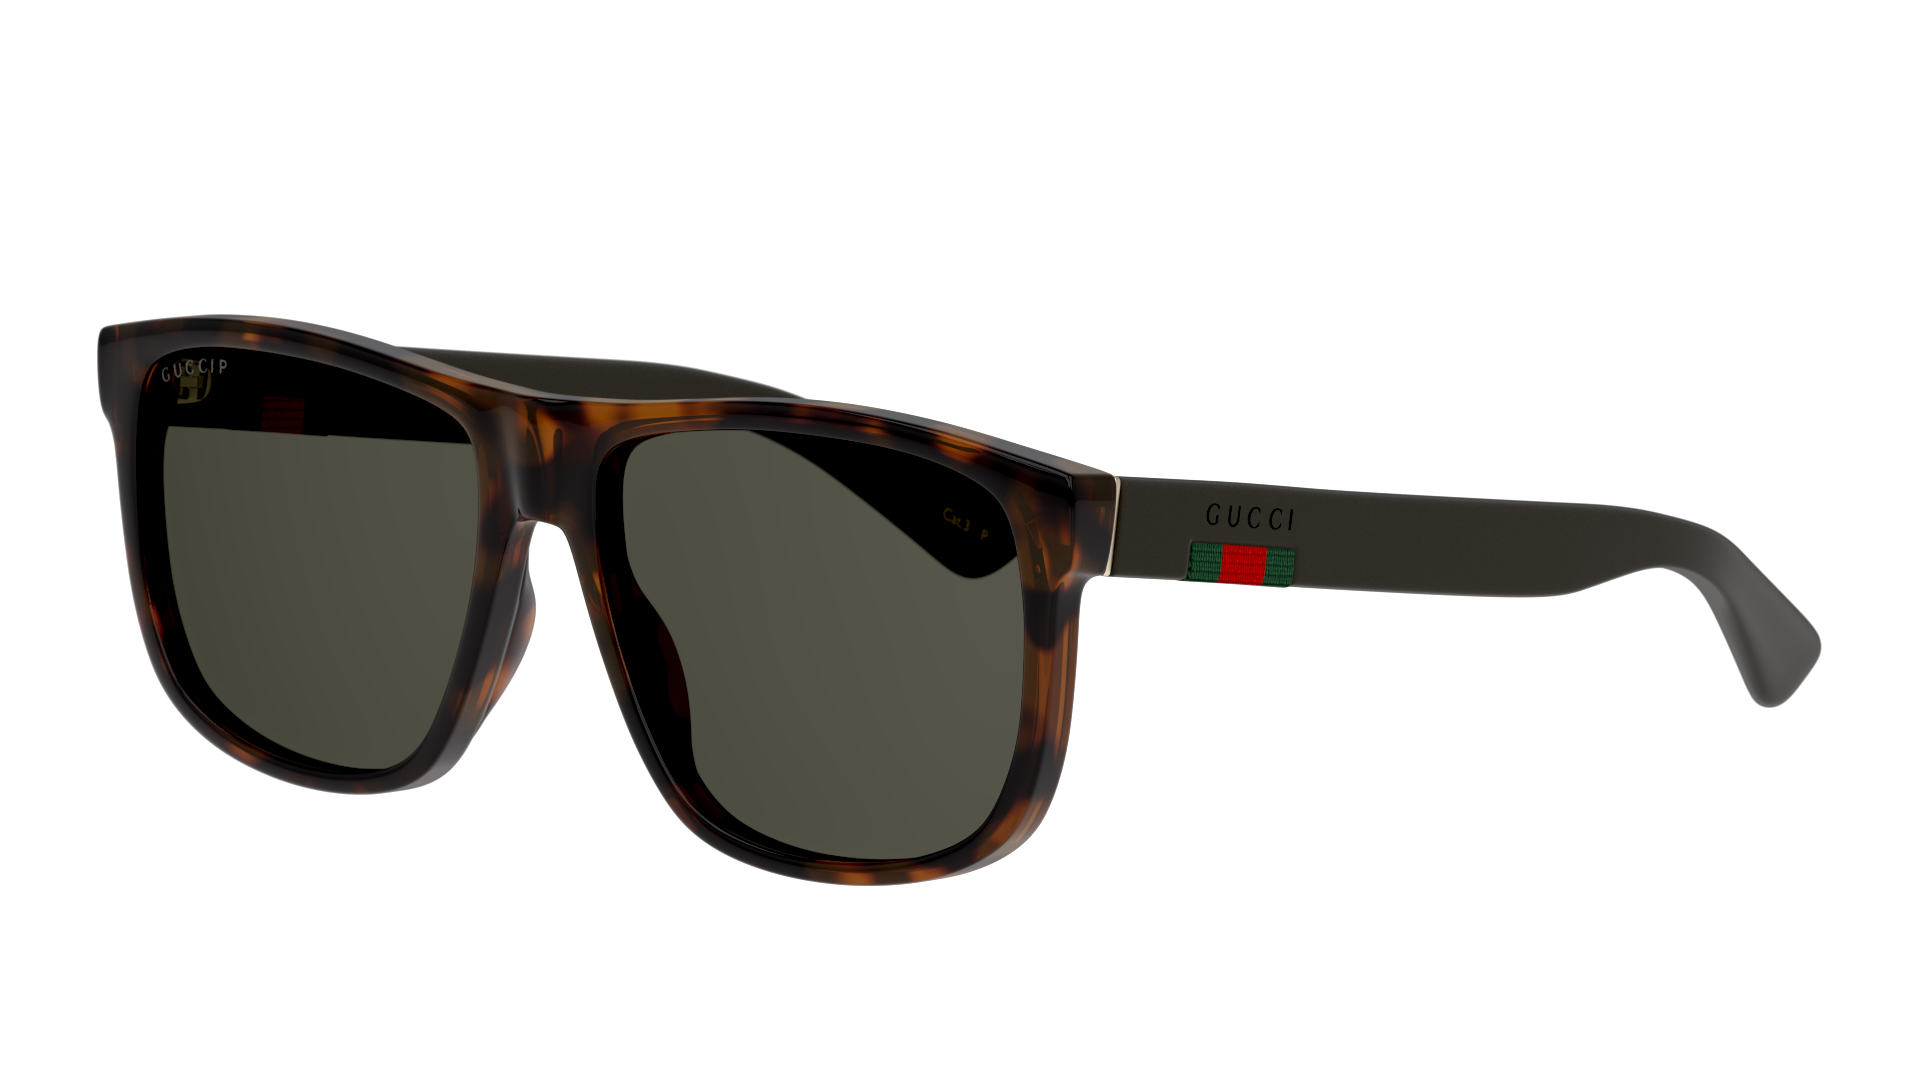 Angle_Left01 Gucci GG 0010S (003) Sunglasses Grey / Tortoise Shell